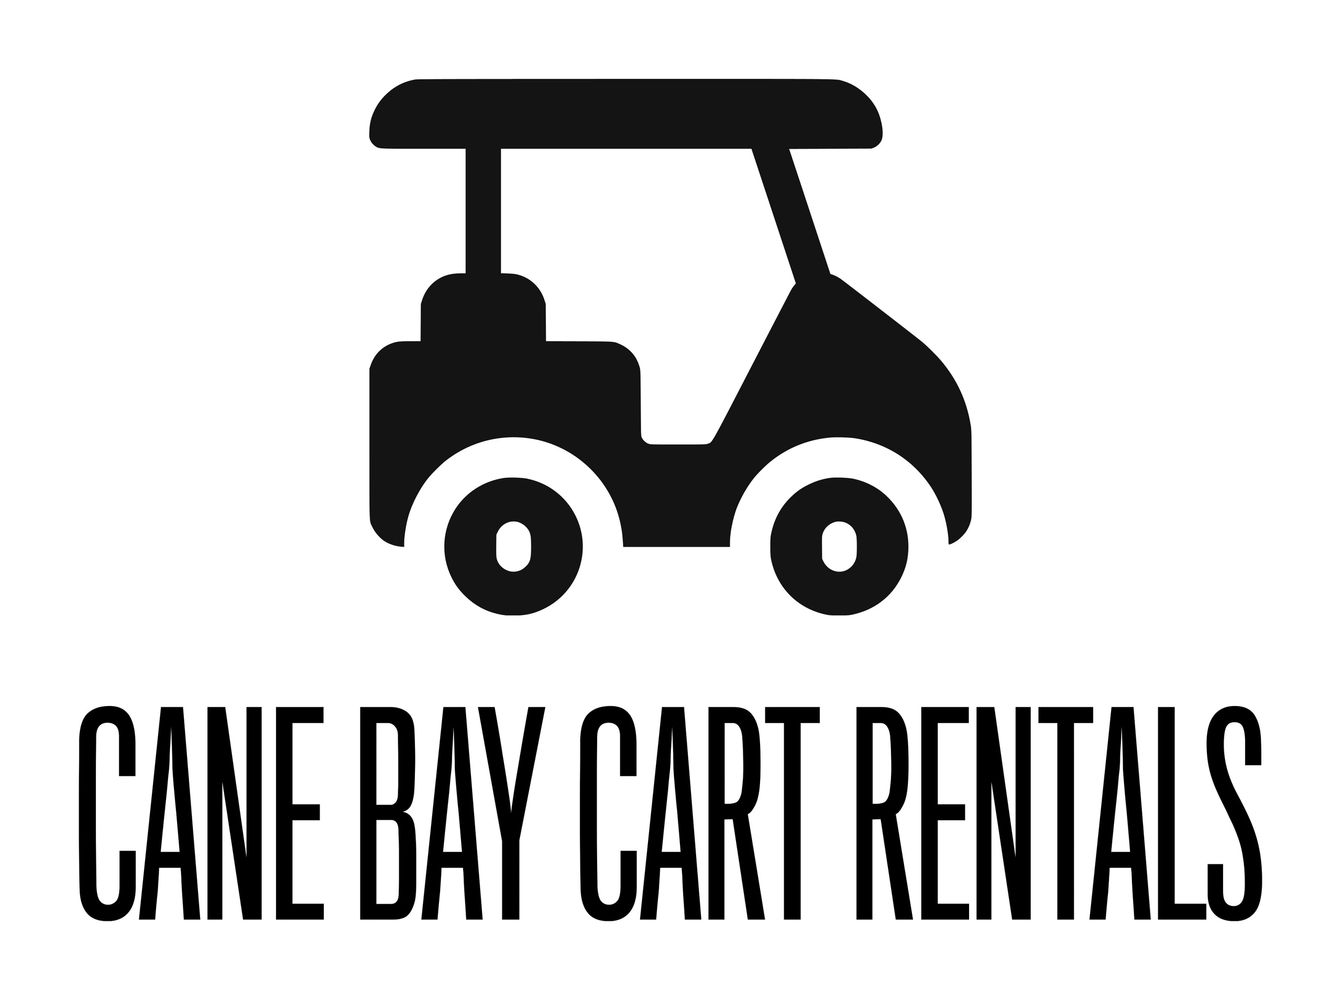 Cane Bay Cart Rentals